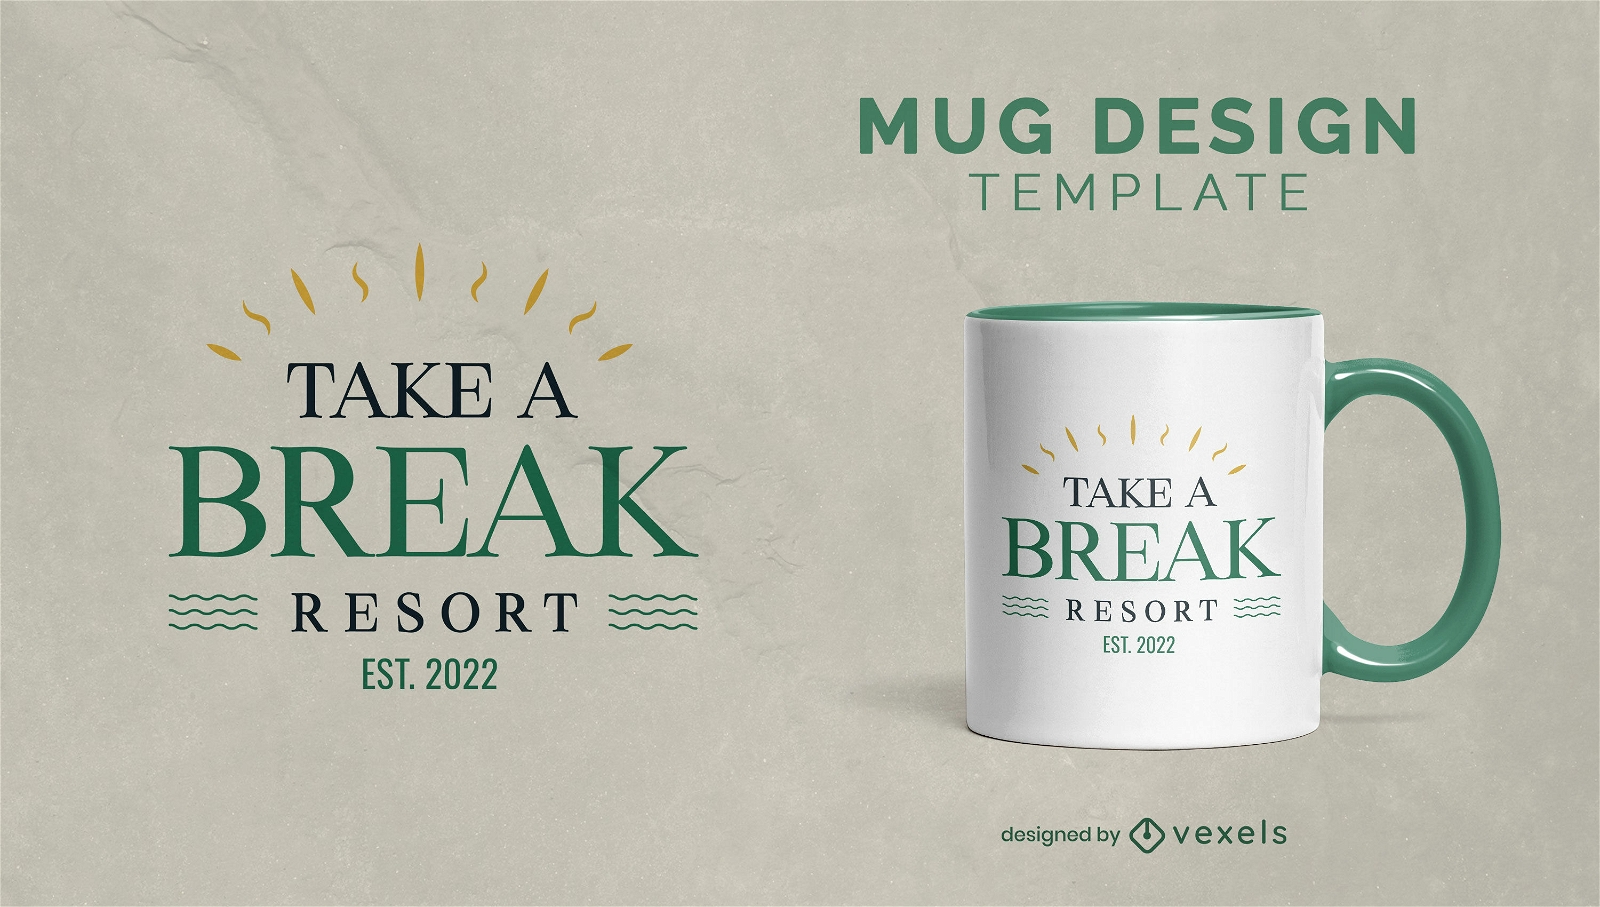 Take a break resort mug design